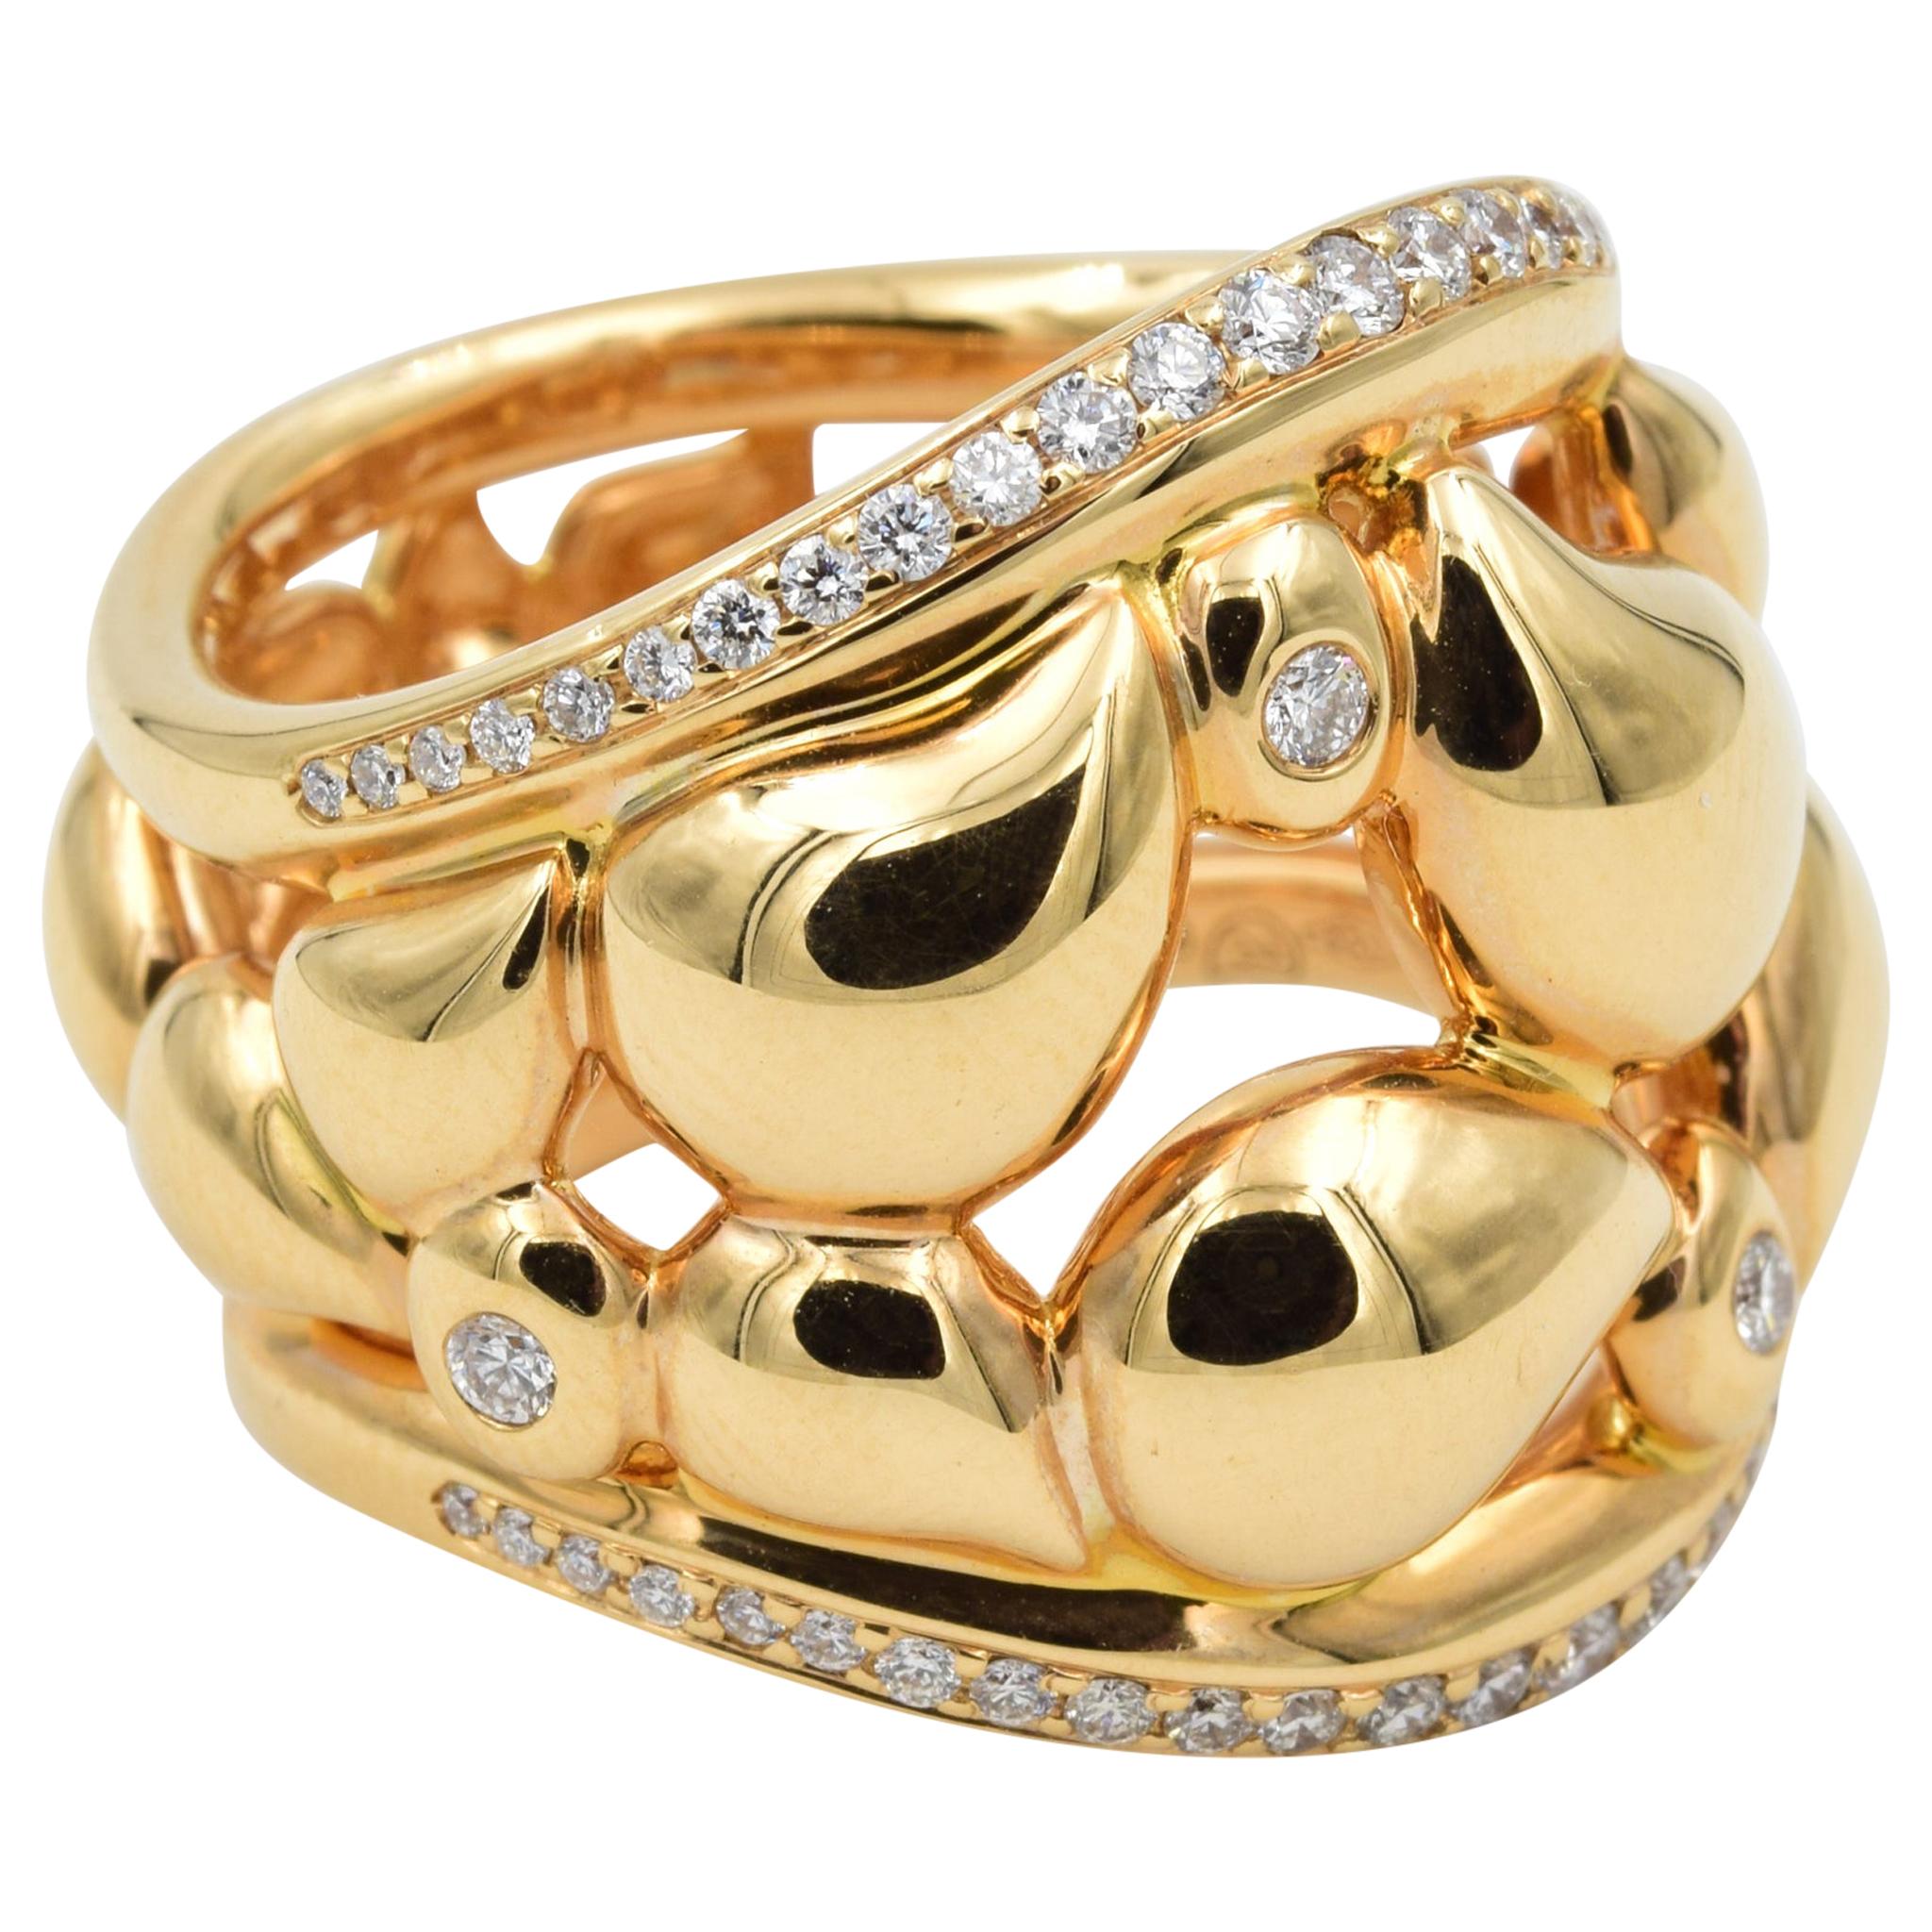 Tamara Comolli Signature Lace Ring in 18k Rose Gold with Diamonds, R-LAC-m-pl-r